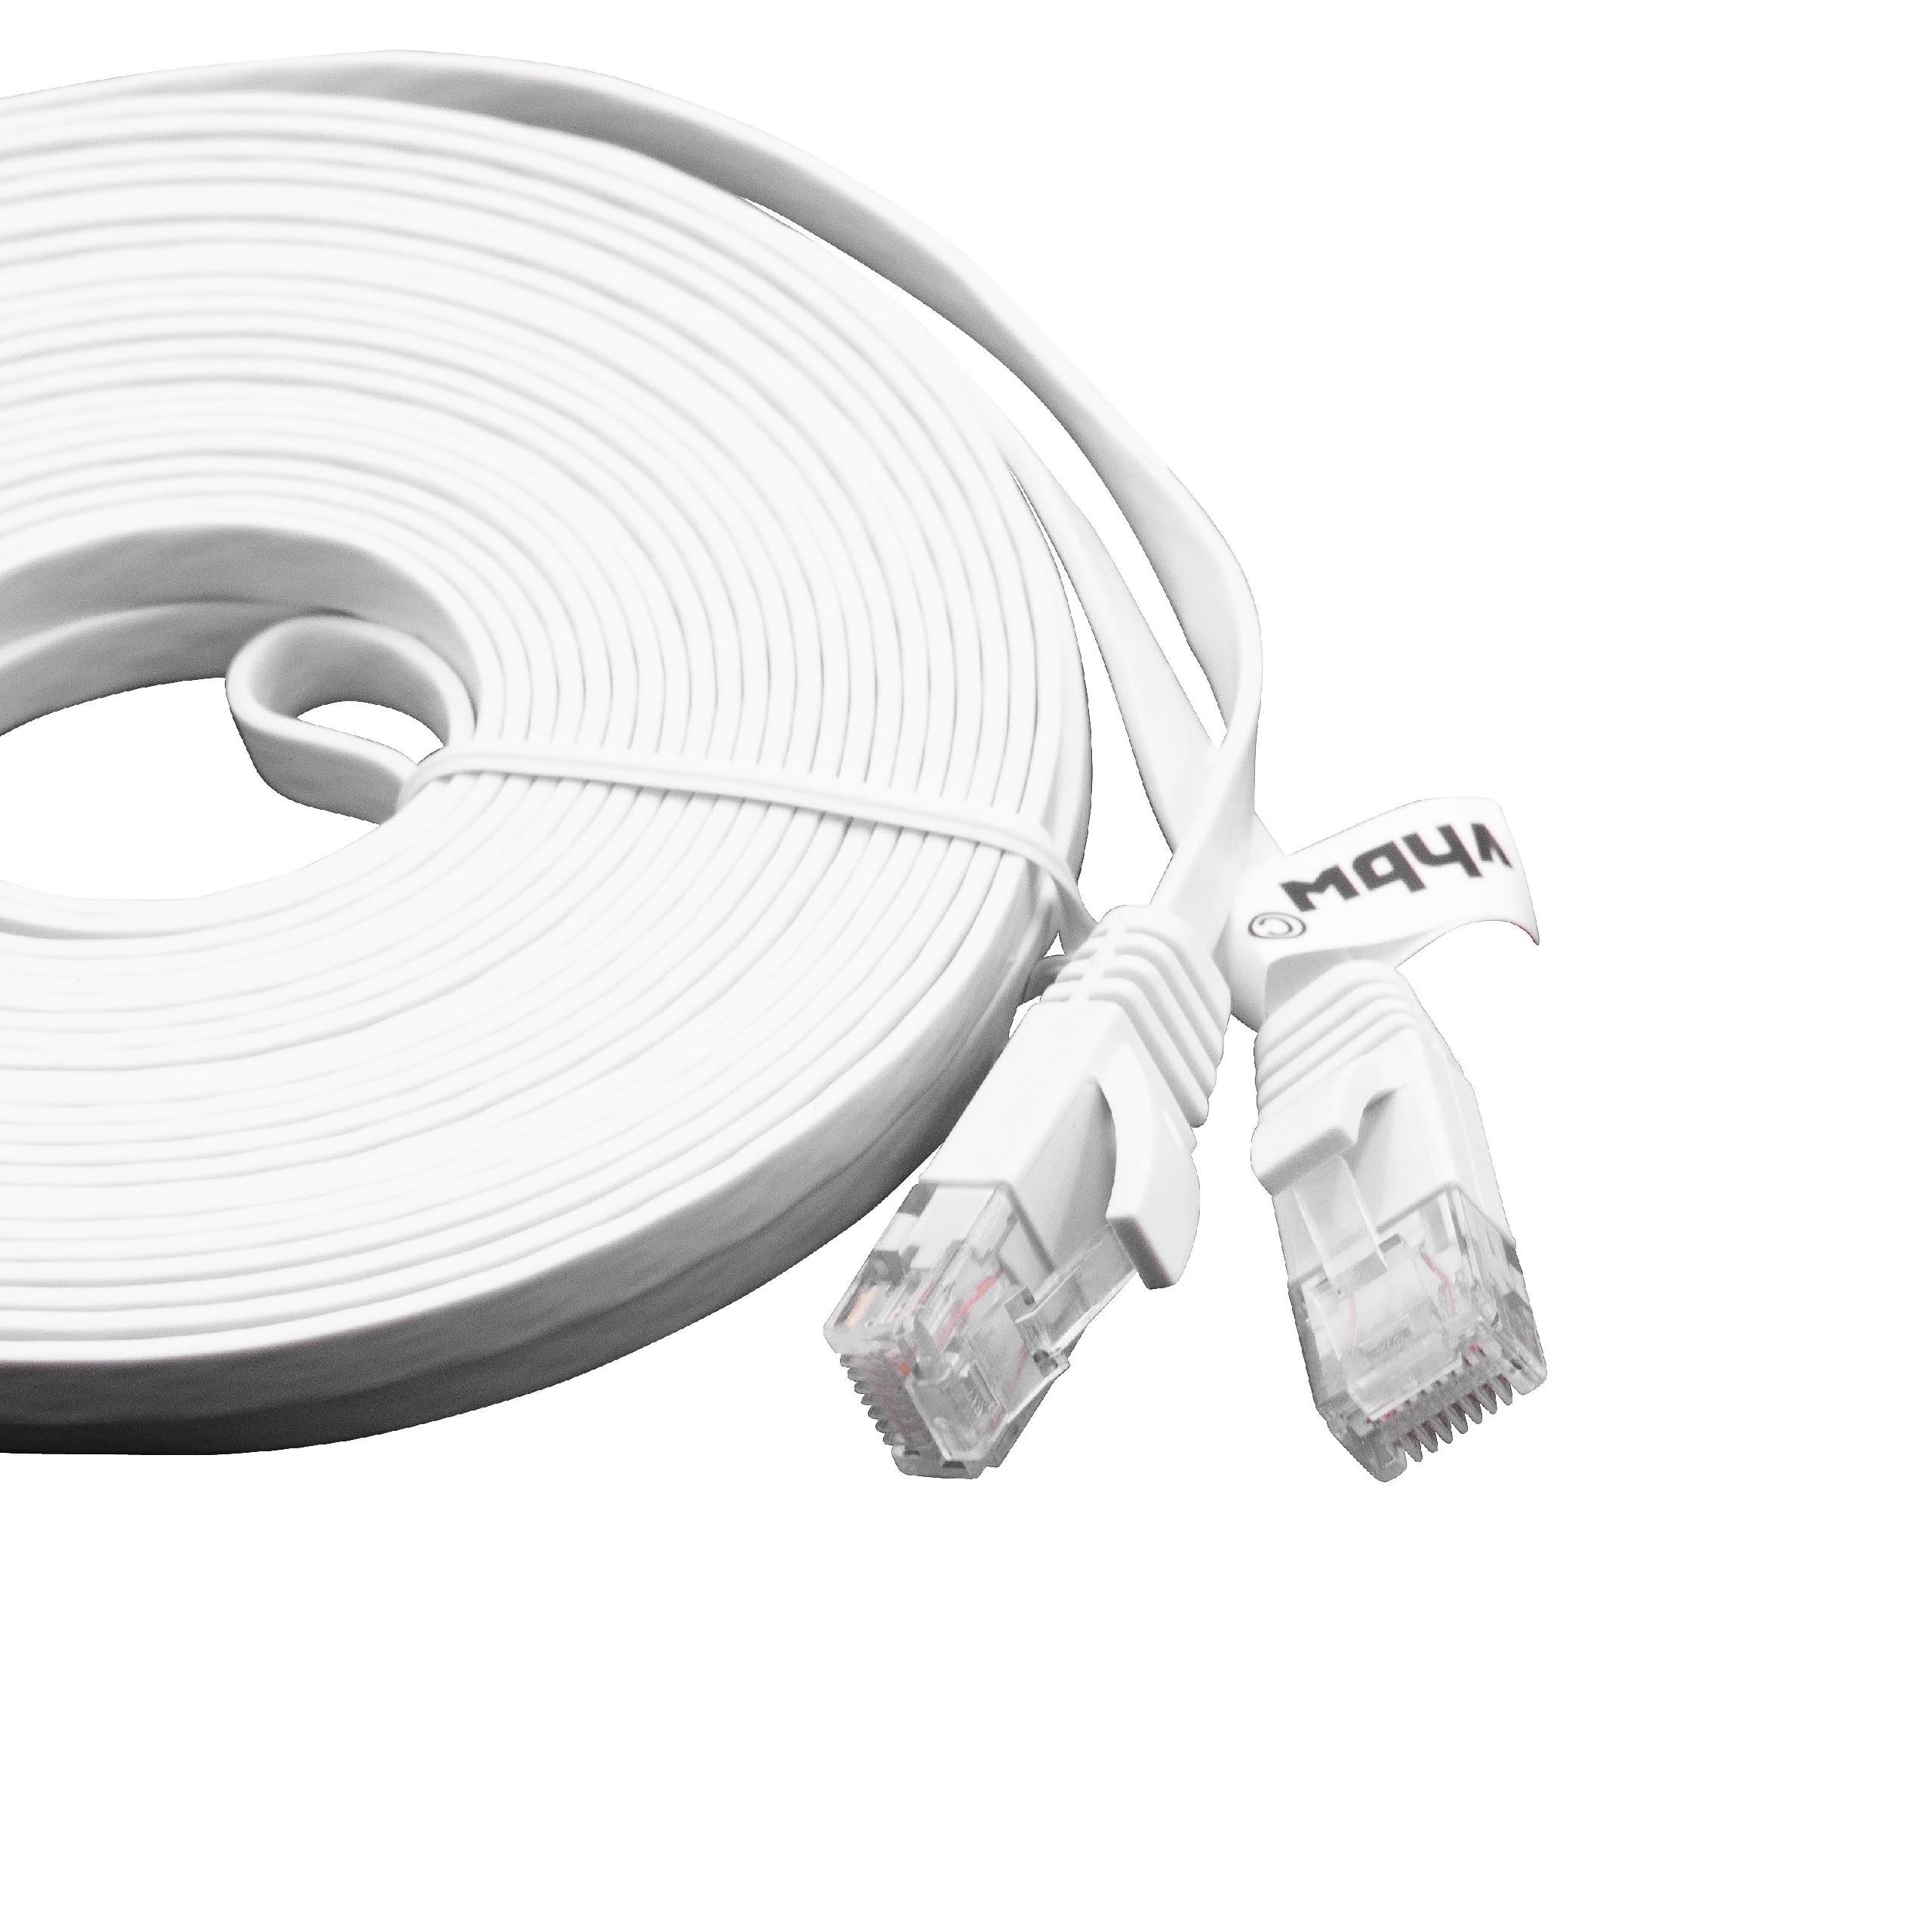 Cavo Ethernet, cavo di rete, cavo LAN, cavo patch Cat6 10m bianco - cavo piatto